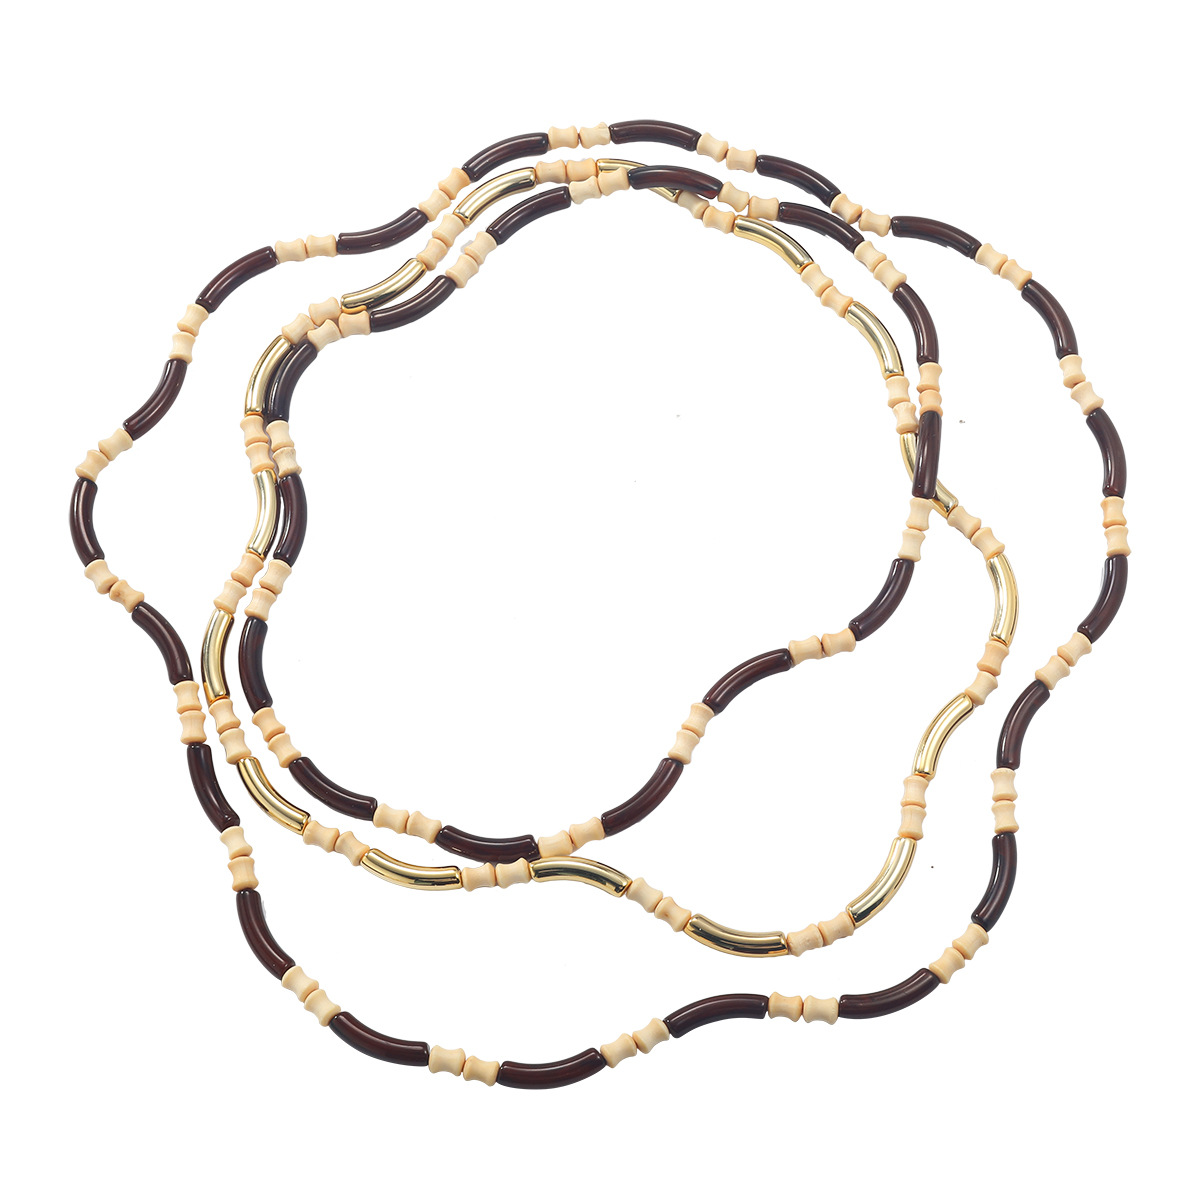 2:Three-piece necklace set